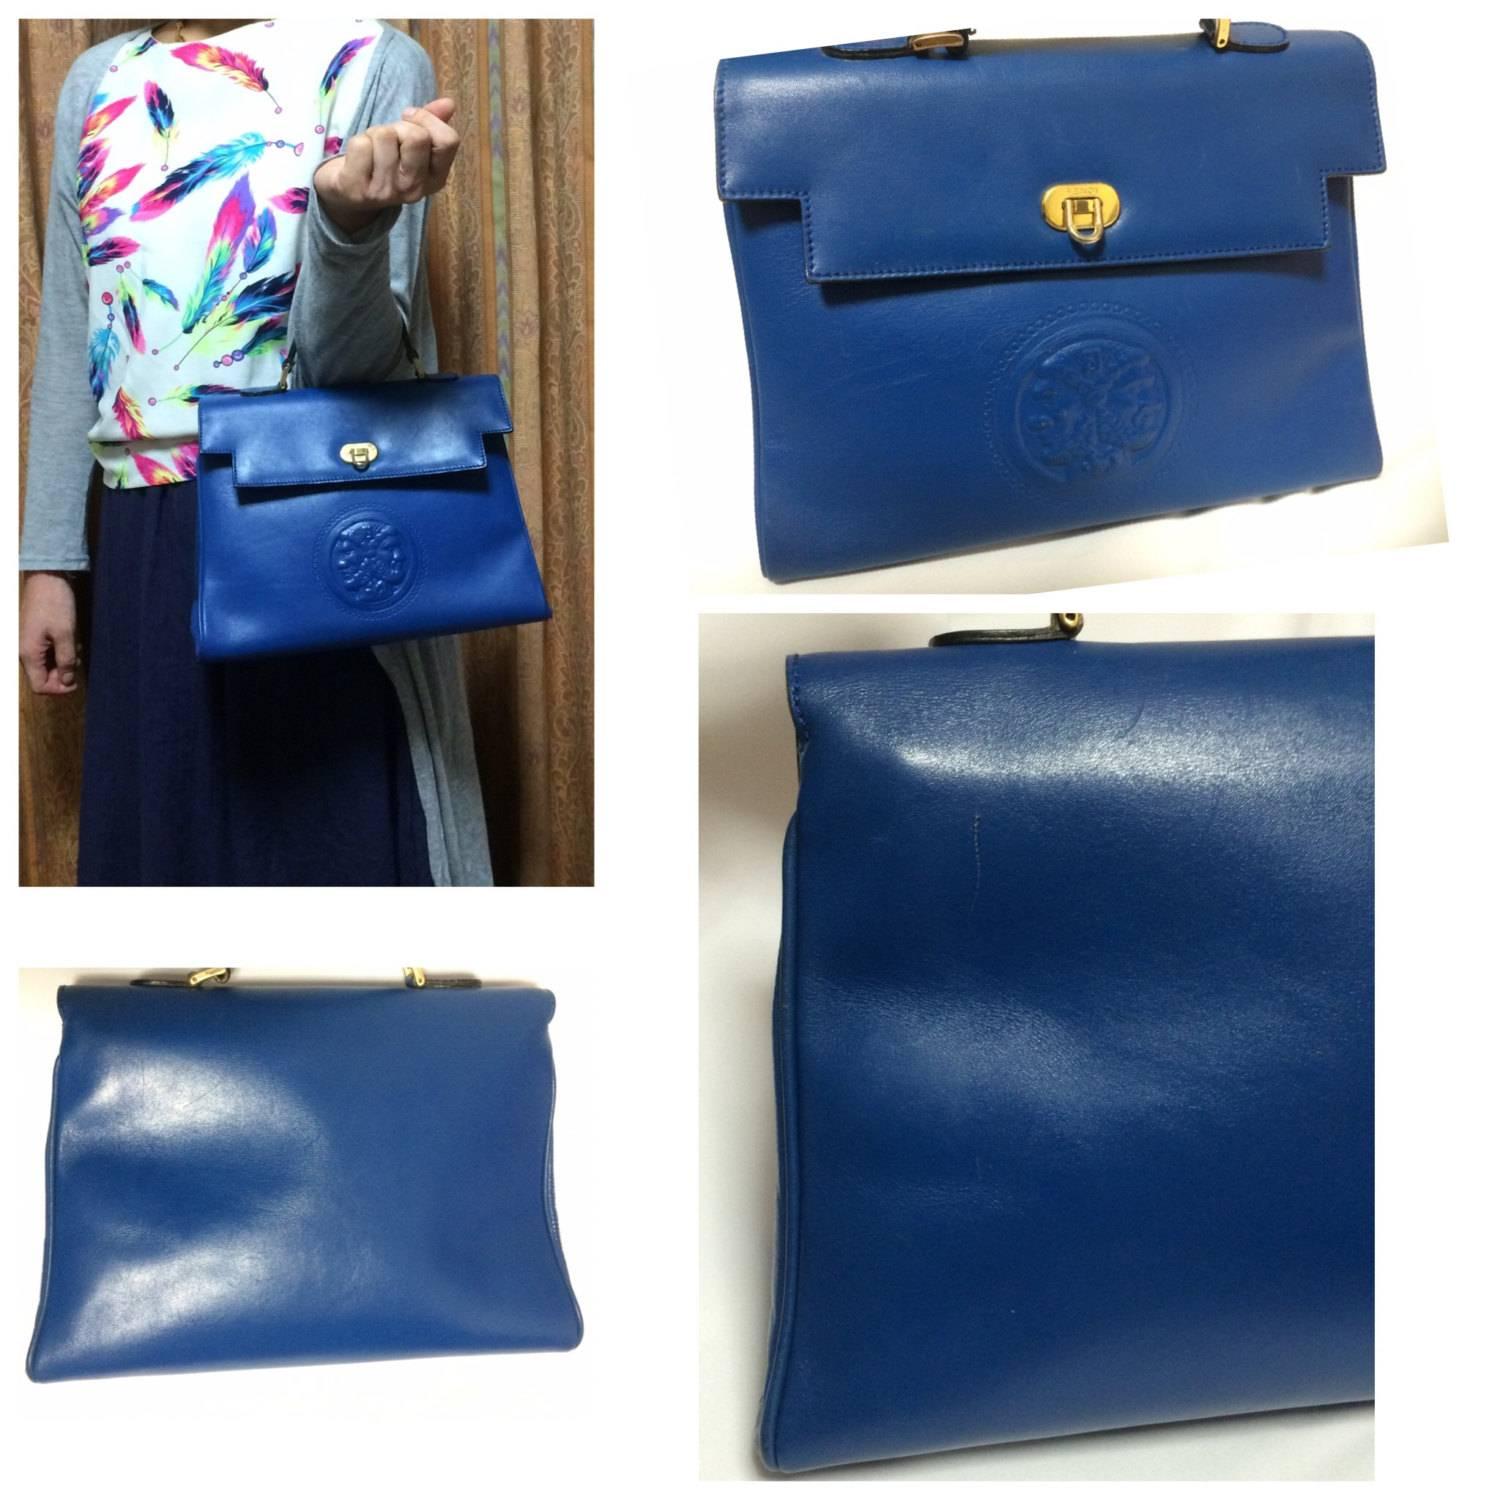 Women's Vintage FENDI blue leather classic kelly style handbag with iconic Janus motif. For Sale